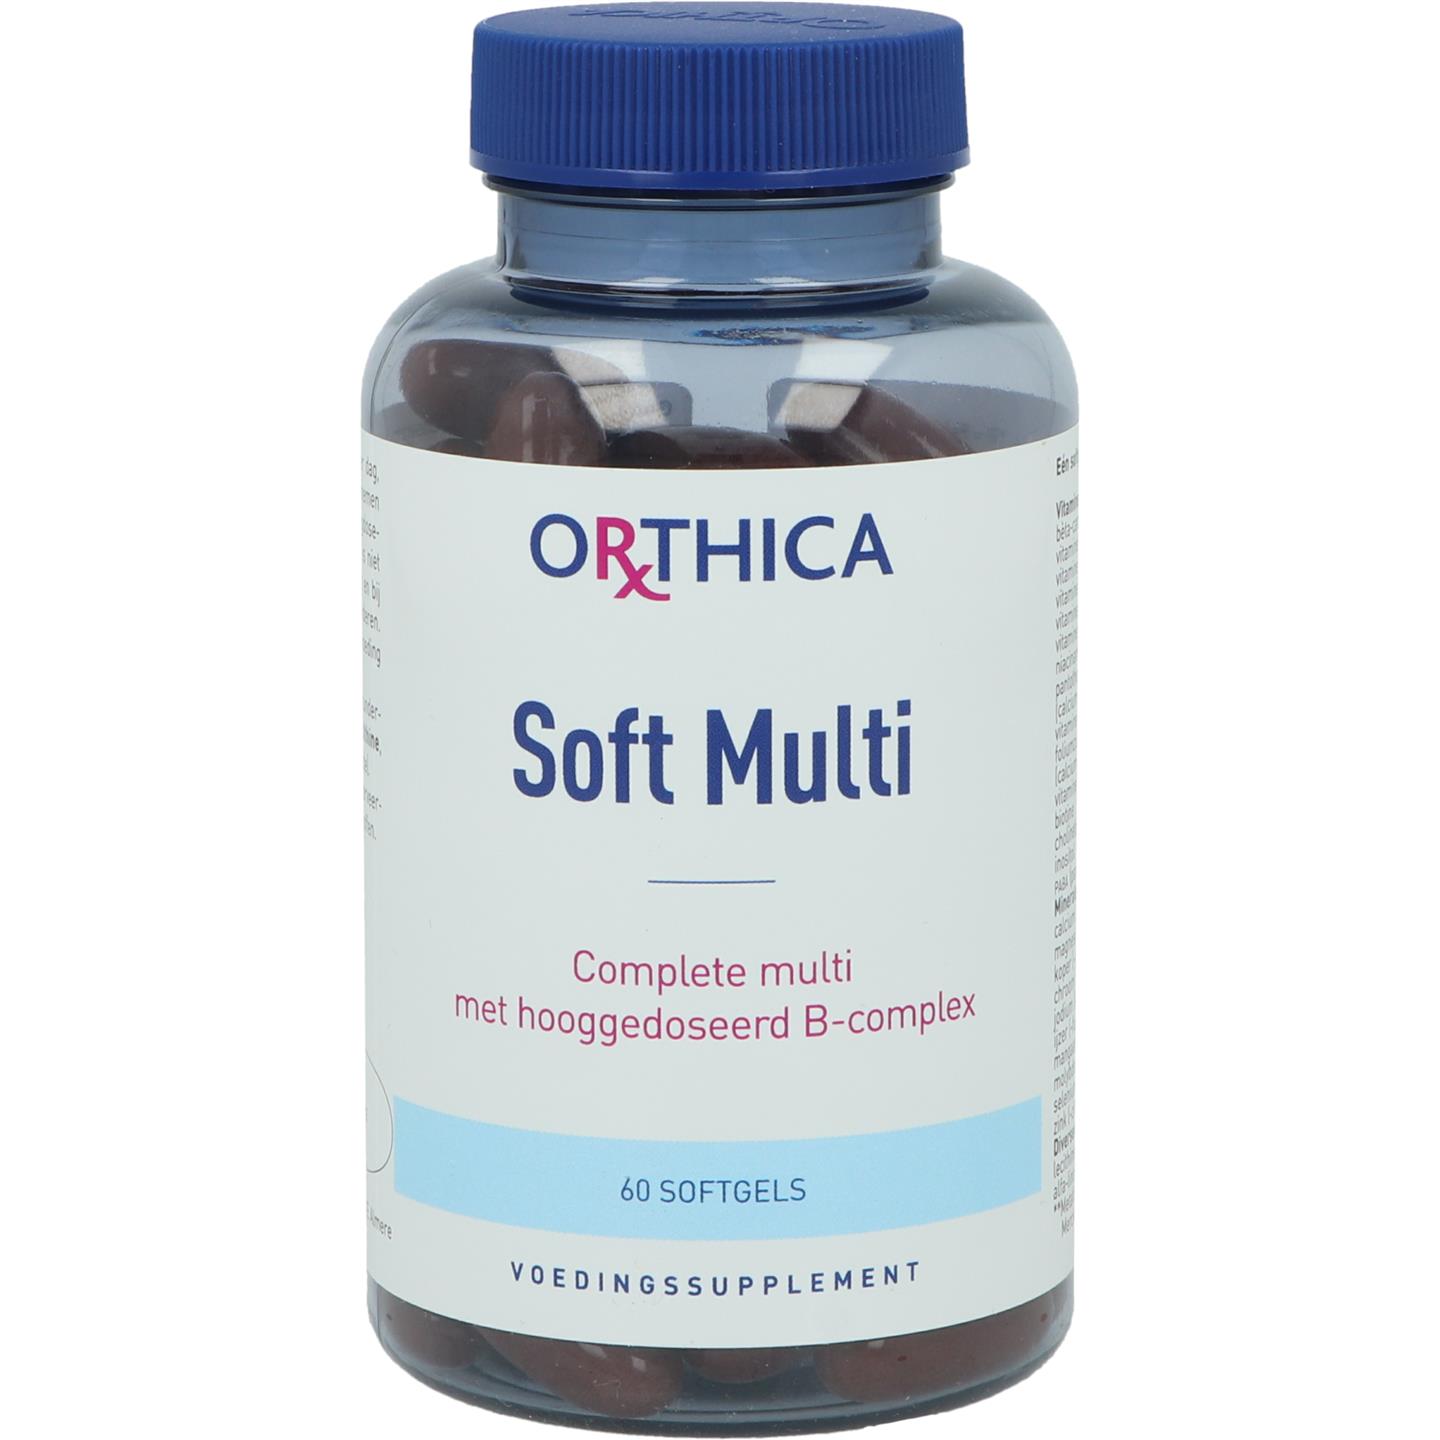 Soft Multi